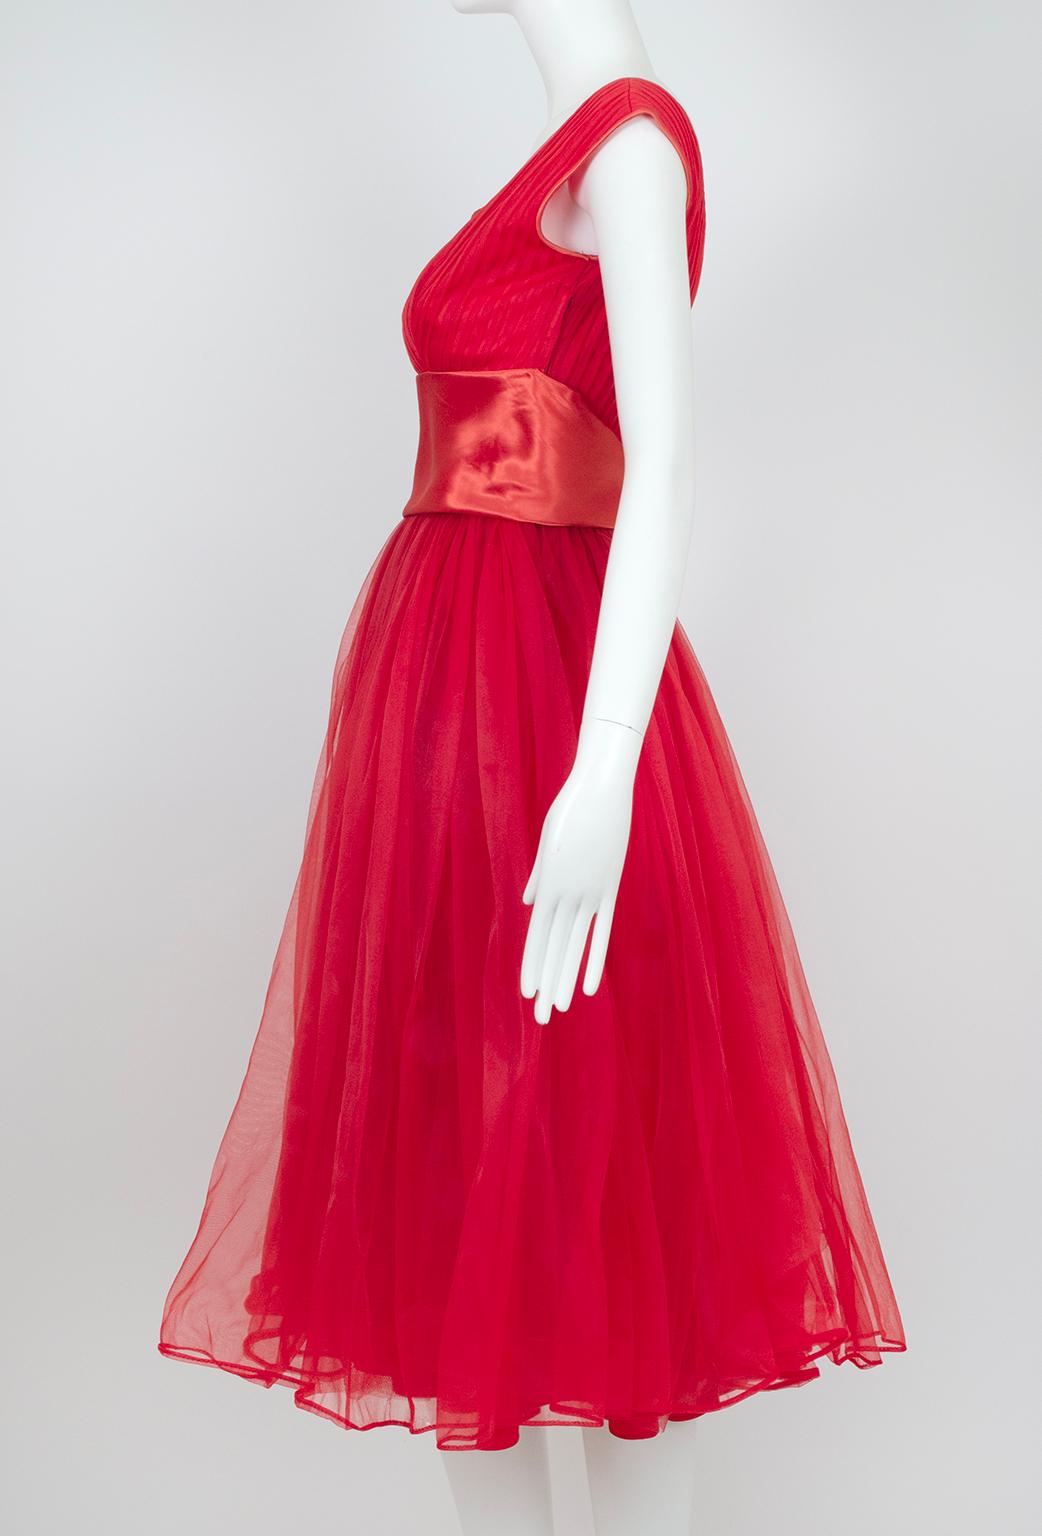 Emma Domb Red Bib Front Ballerina Party Dress with Satin Cummerbund – S, 1950s For Sale 3